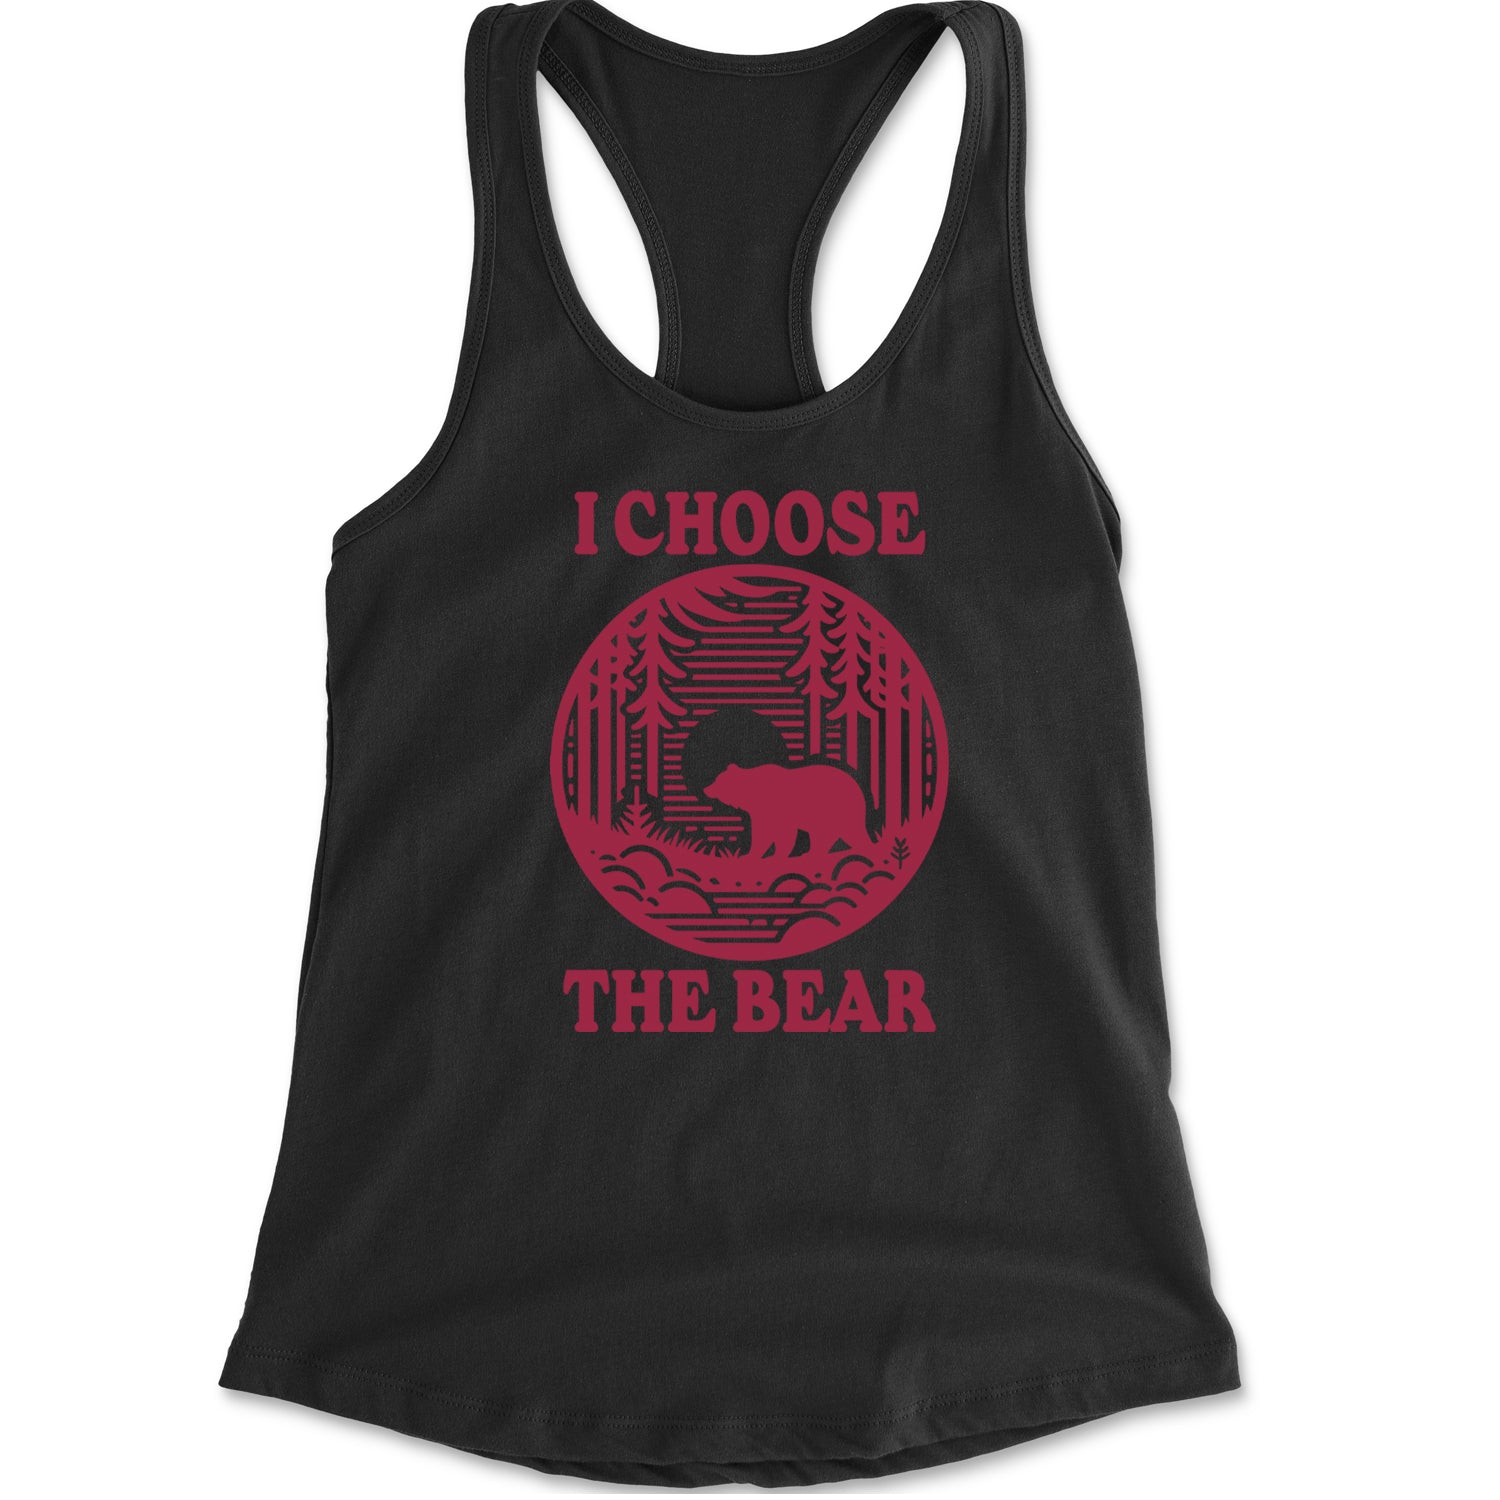 I Choose The Bear Companion Survival Choice Racerback Tank Top for Women